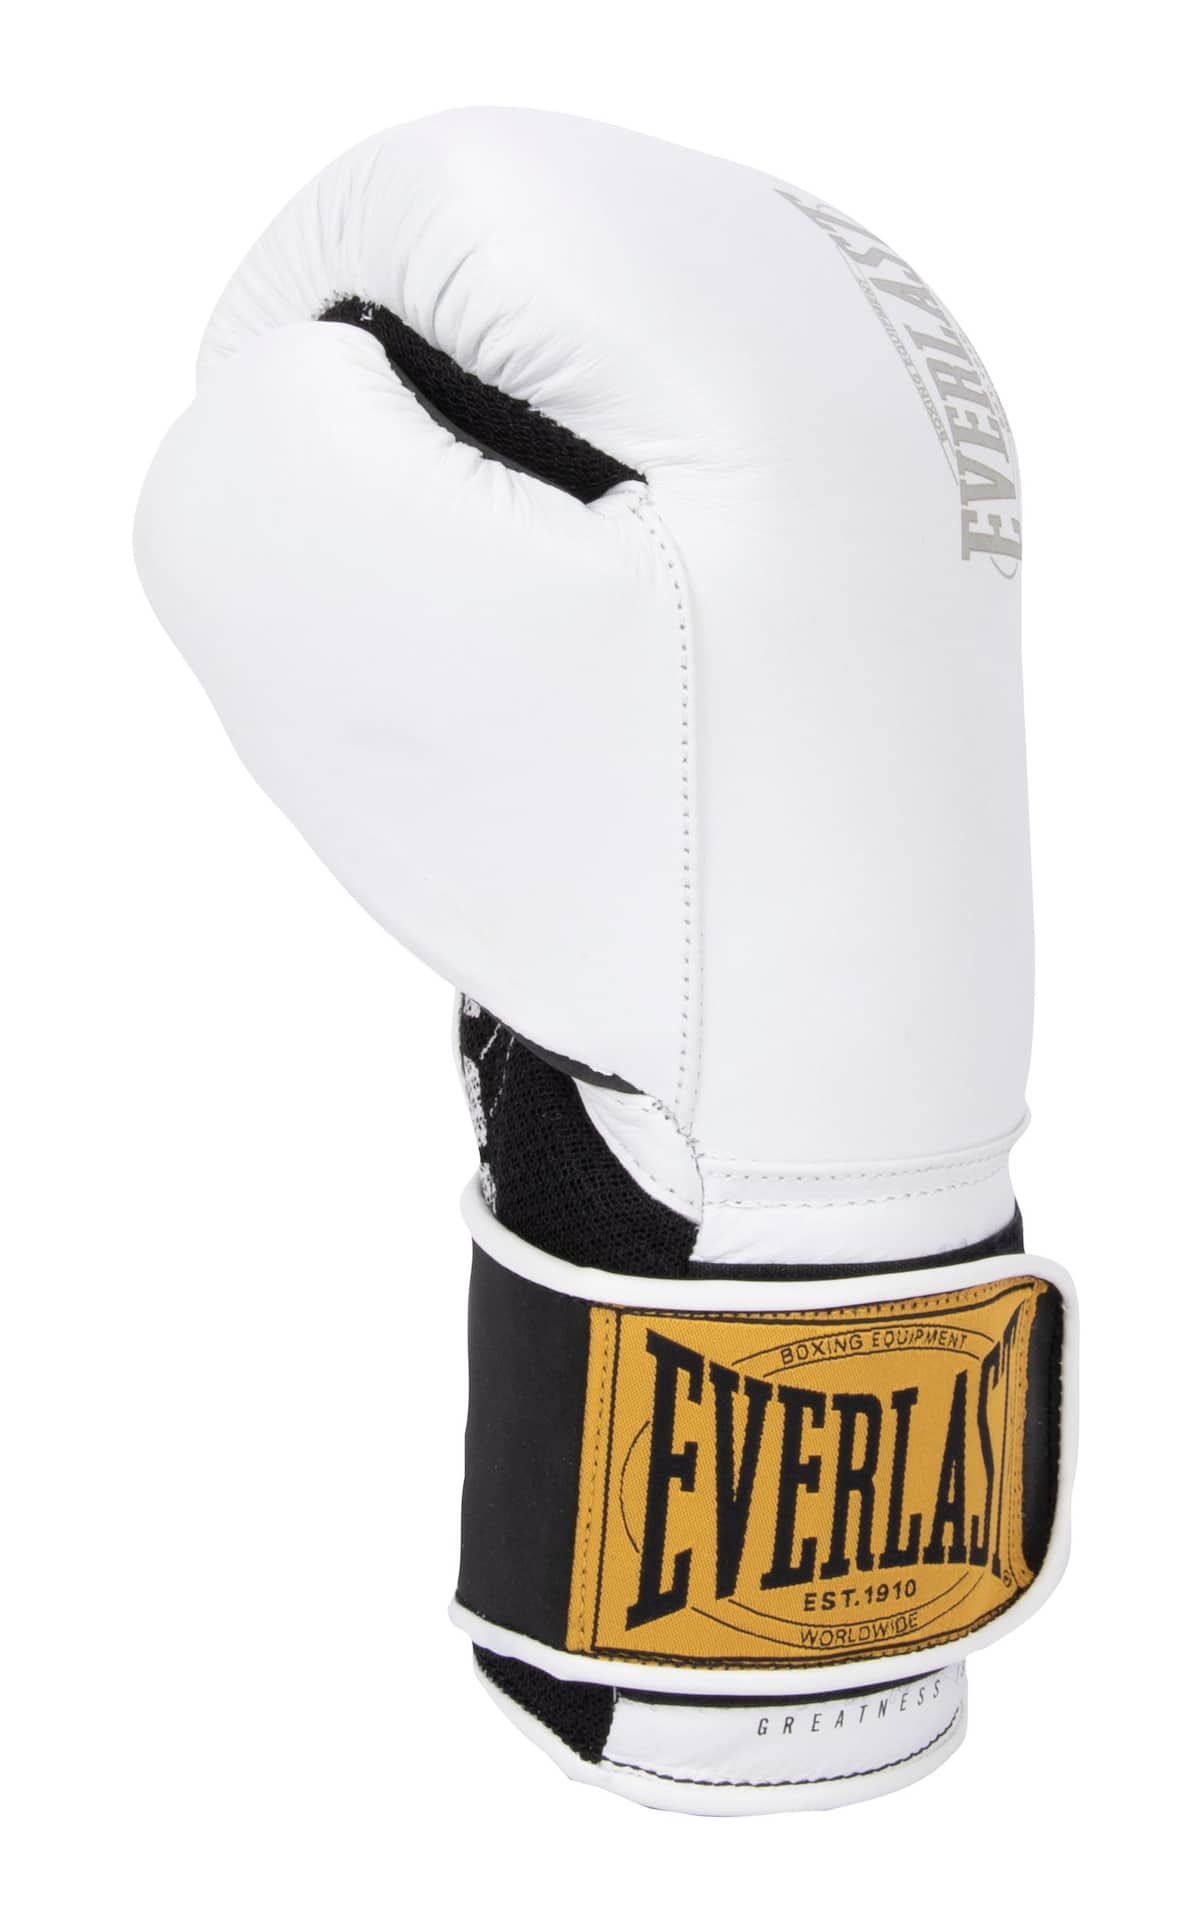 Everlast MMA Pro Style Grappling Boxing Gloves, Black, Small/Medium